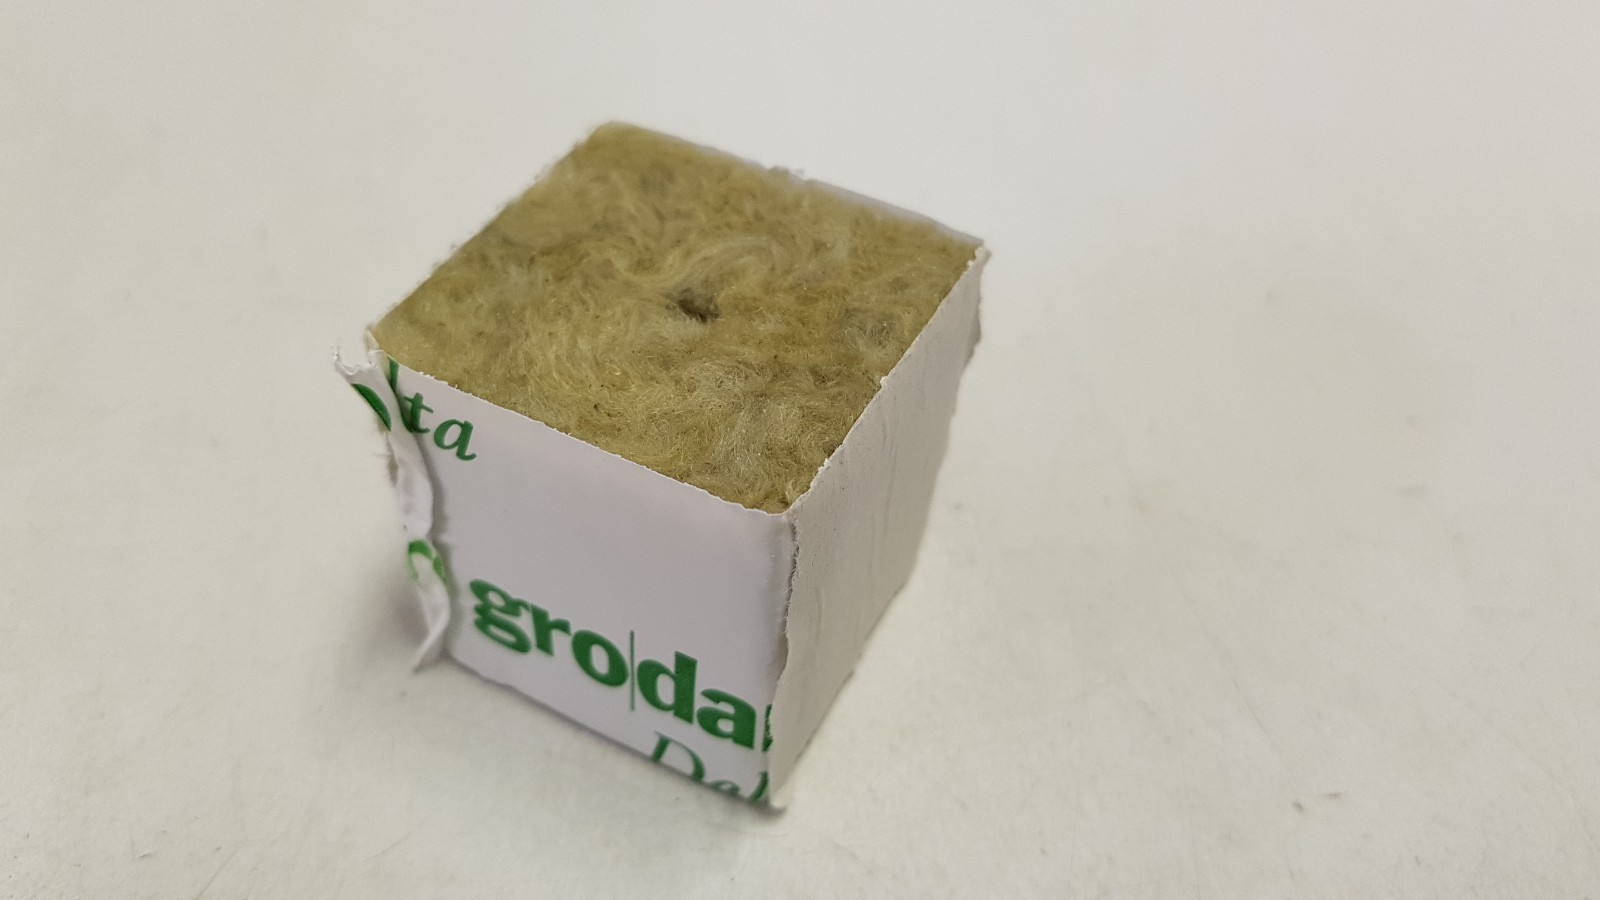 Carton 40mm wrapped cubes - 2250 per carton - Grodan MM PM 40/40